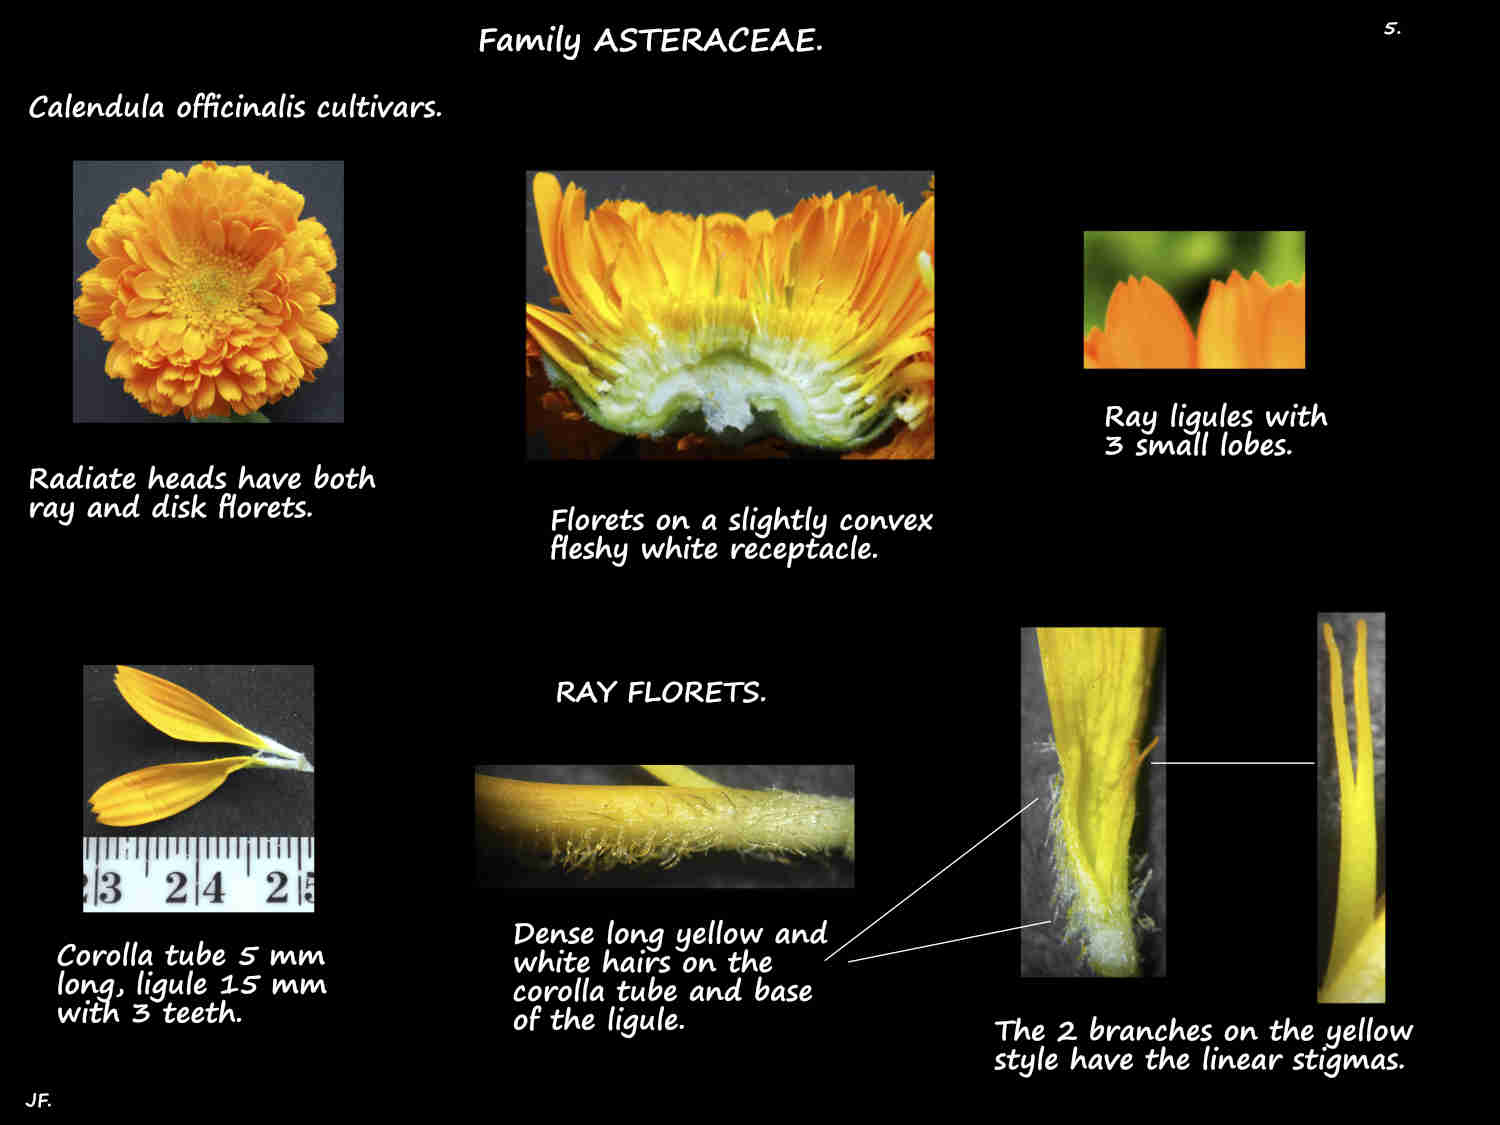 5 Calendula officinalis receptacle & ray florets